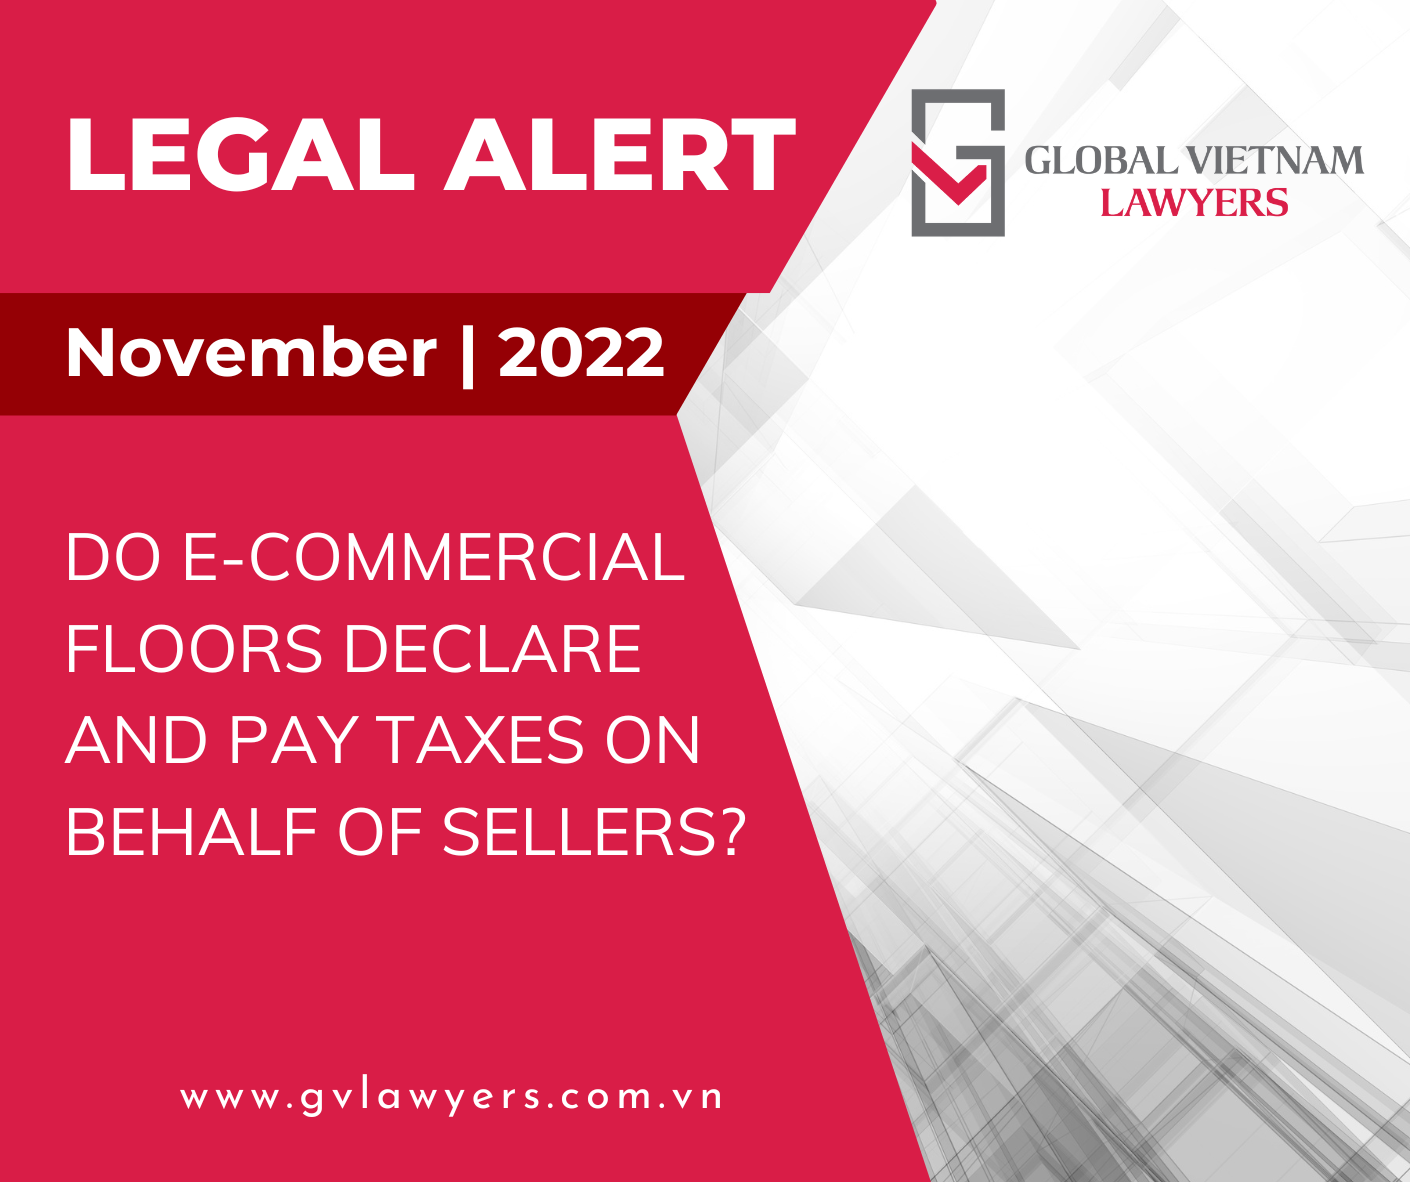 Legal Alert November 2022 EN